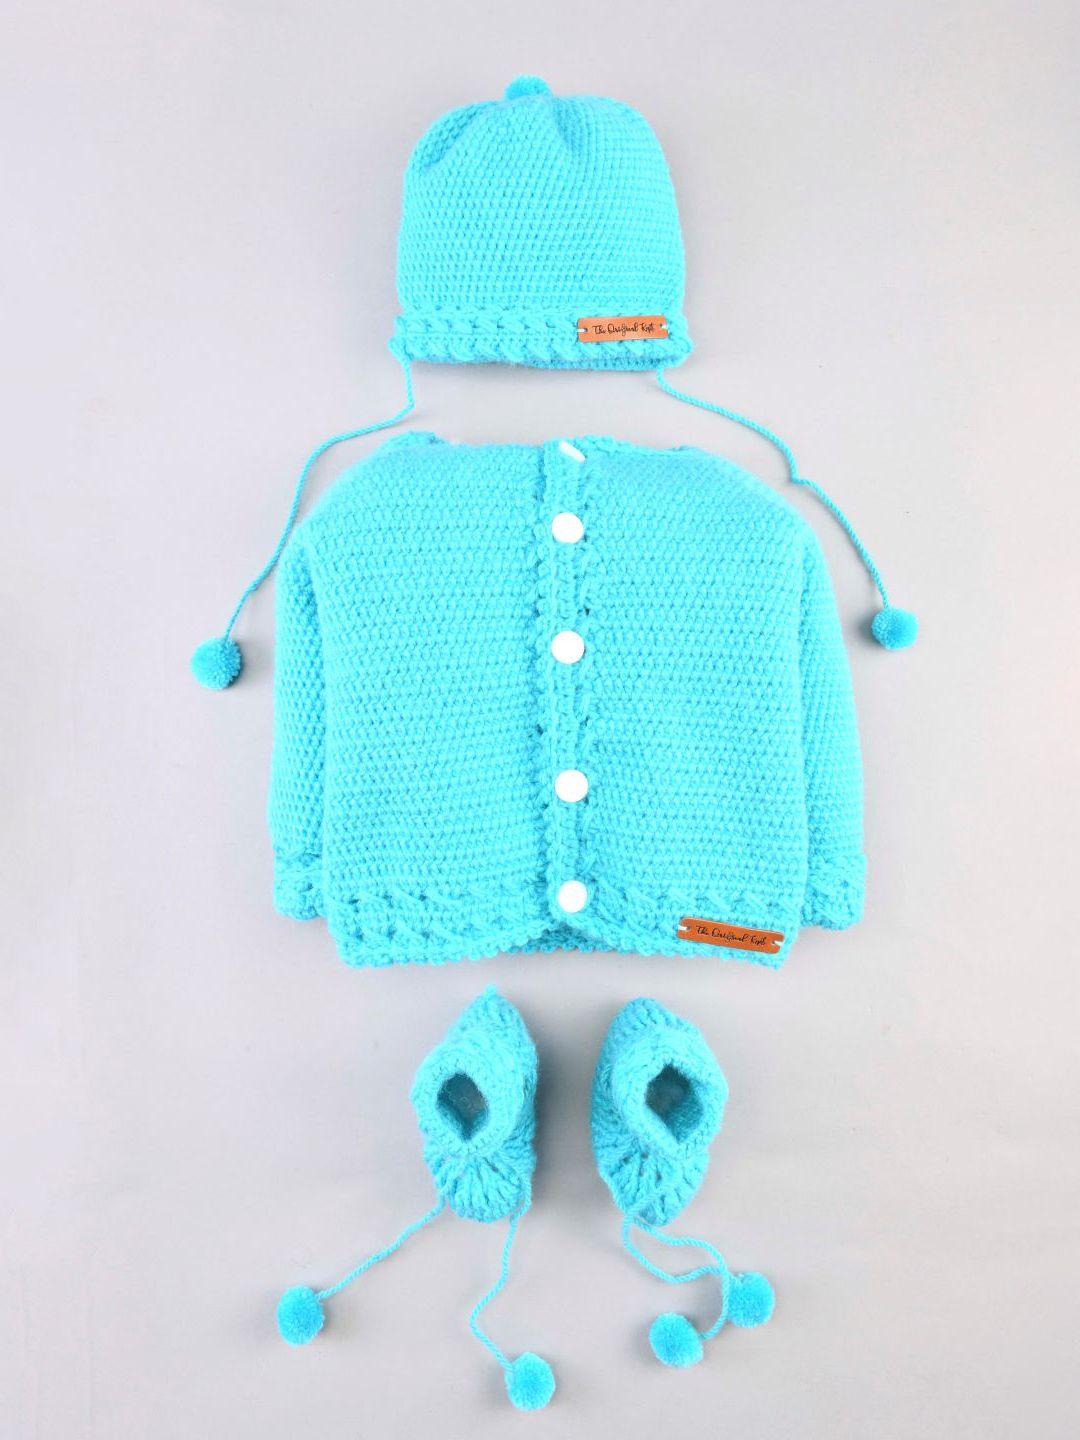 The Original Knit Infant Kids Ribbed Acrylic Cardigan Sweater Set